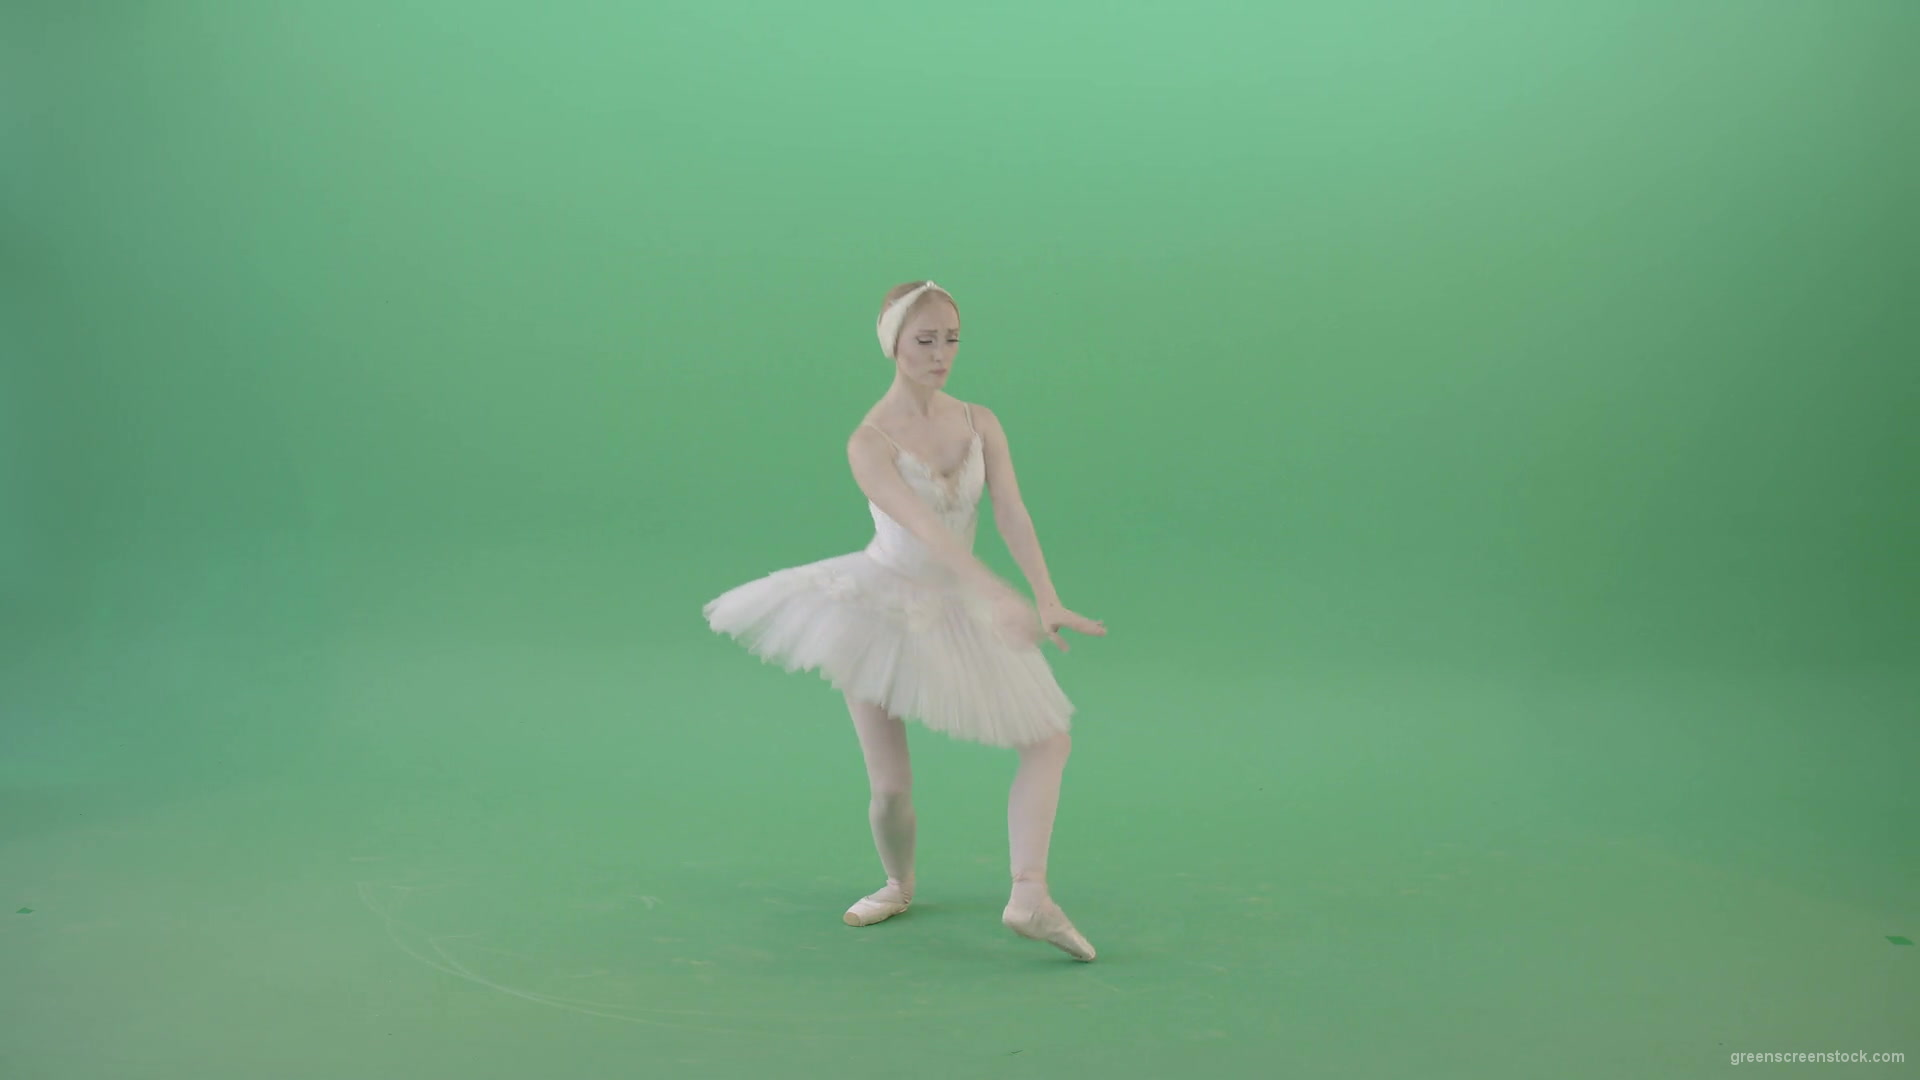 Elegant-snowwhite-ballet-dancer-ballerina-dancing-isolated-on-Green-Screen-4K-Video-Footage-1920_006 Green Screen Stock